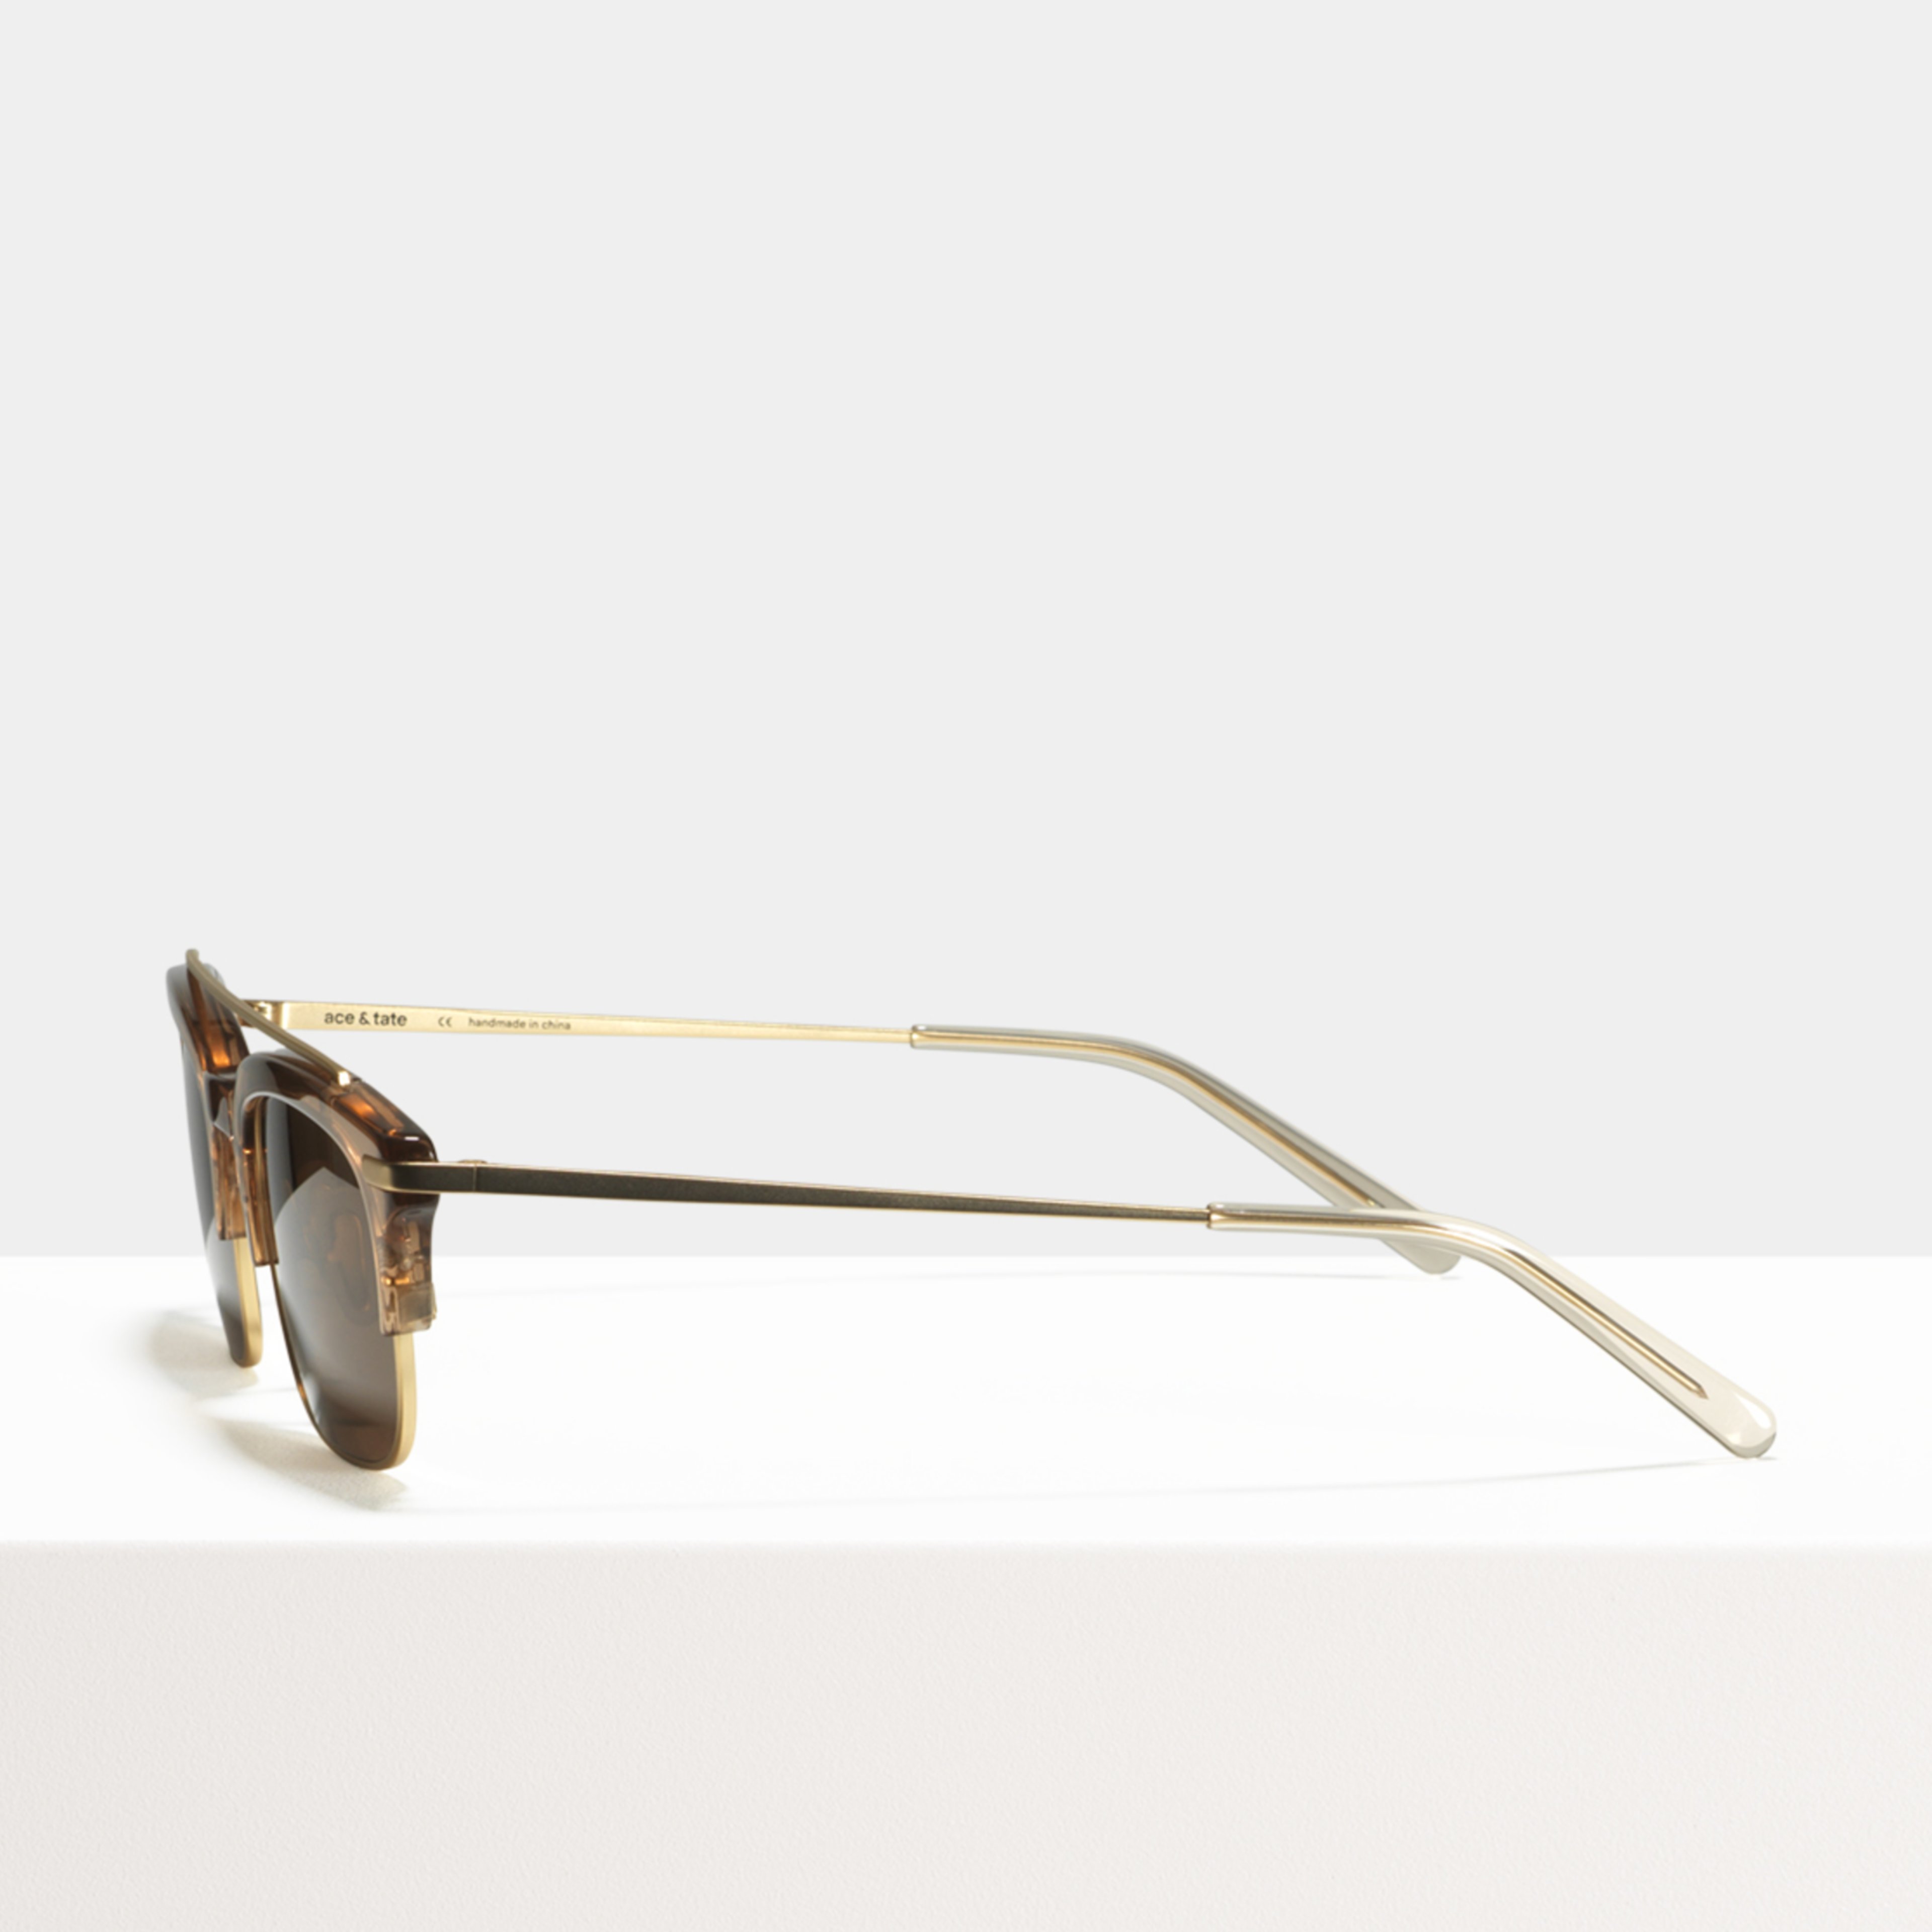 Ace & Tate Gafas de sol | rectangulares combinación in Marrón